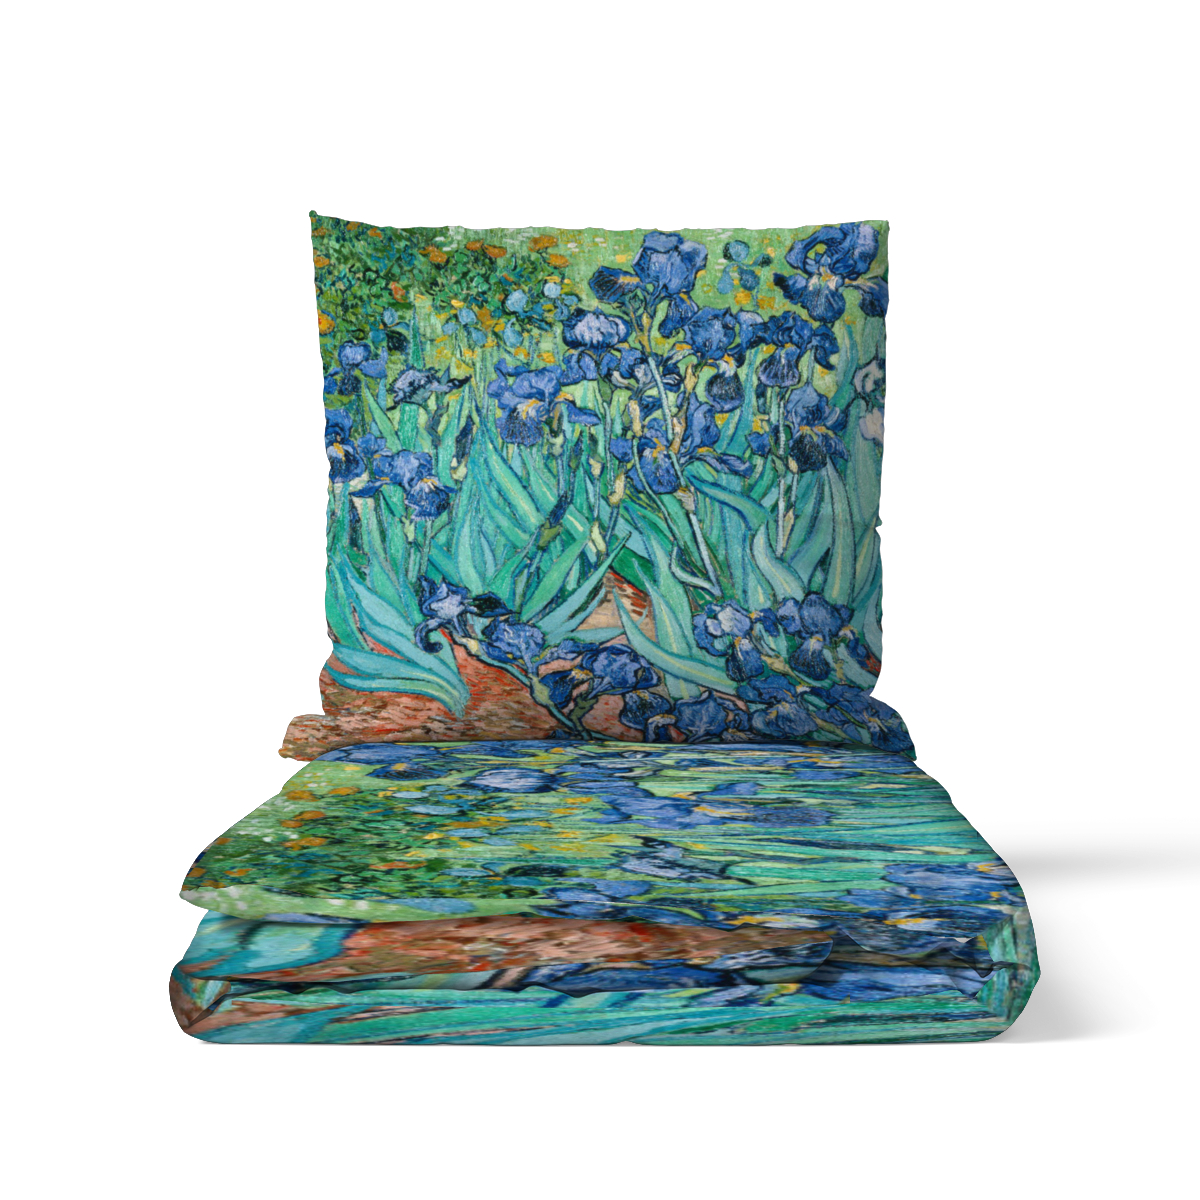 Bettwäsche-Set van Gogh - Iris Mikrofaser